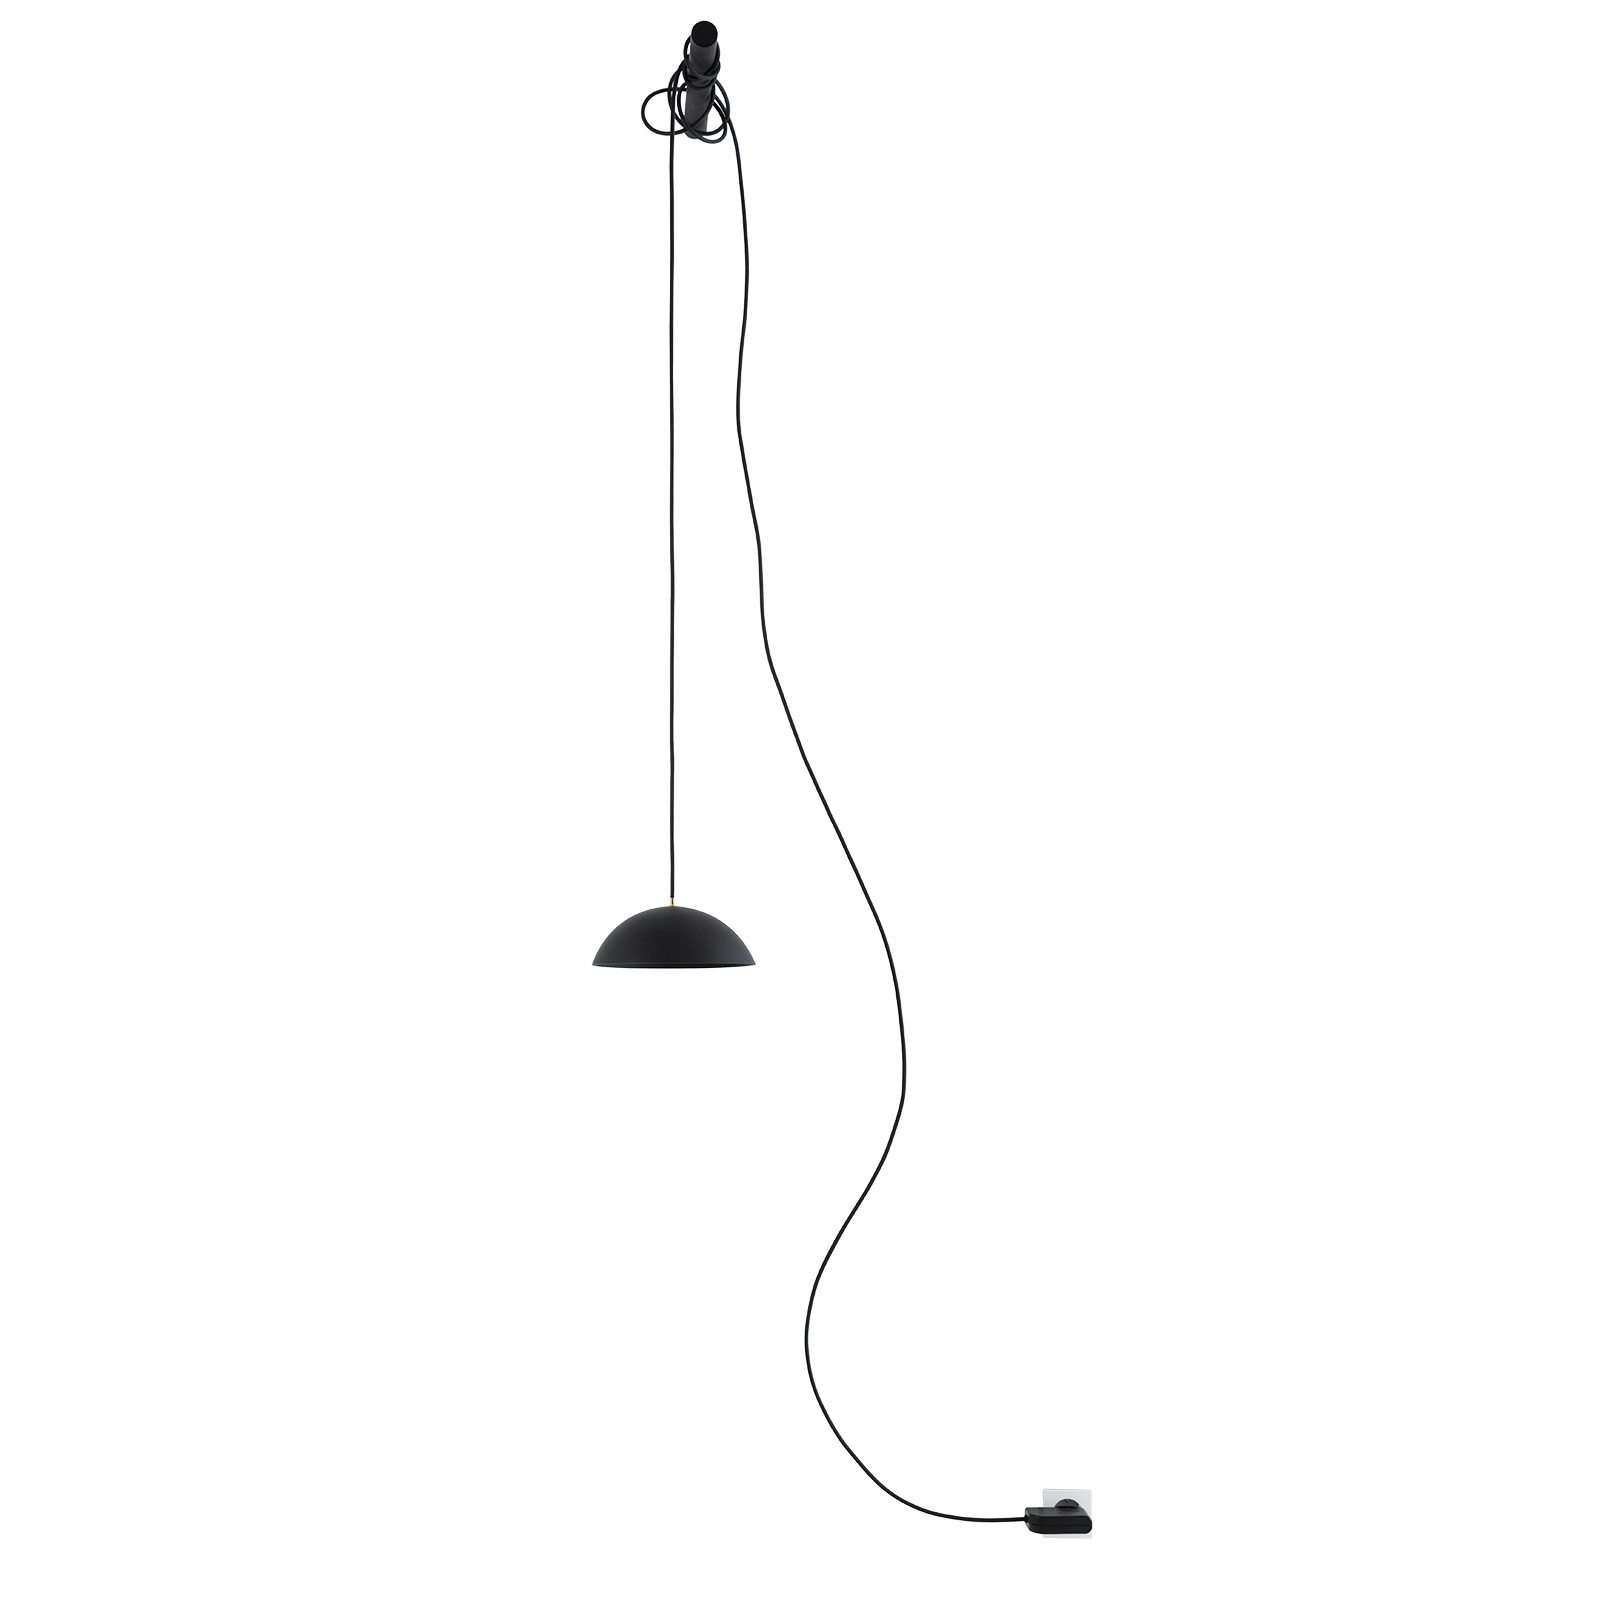 Nyta Pong Plug LED hanglamp met stekker